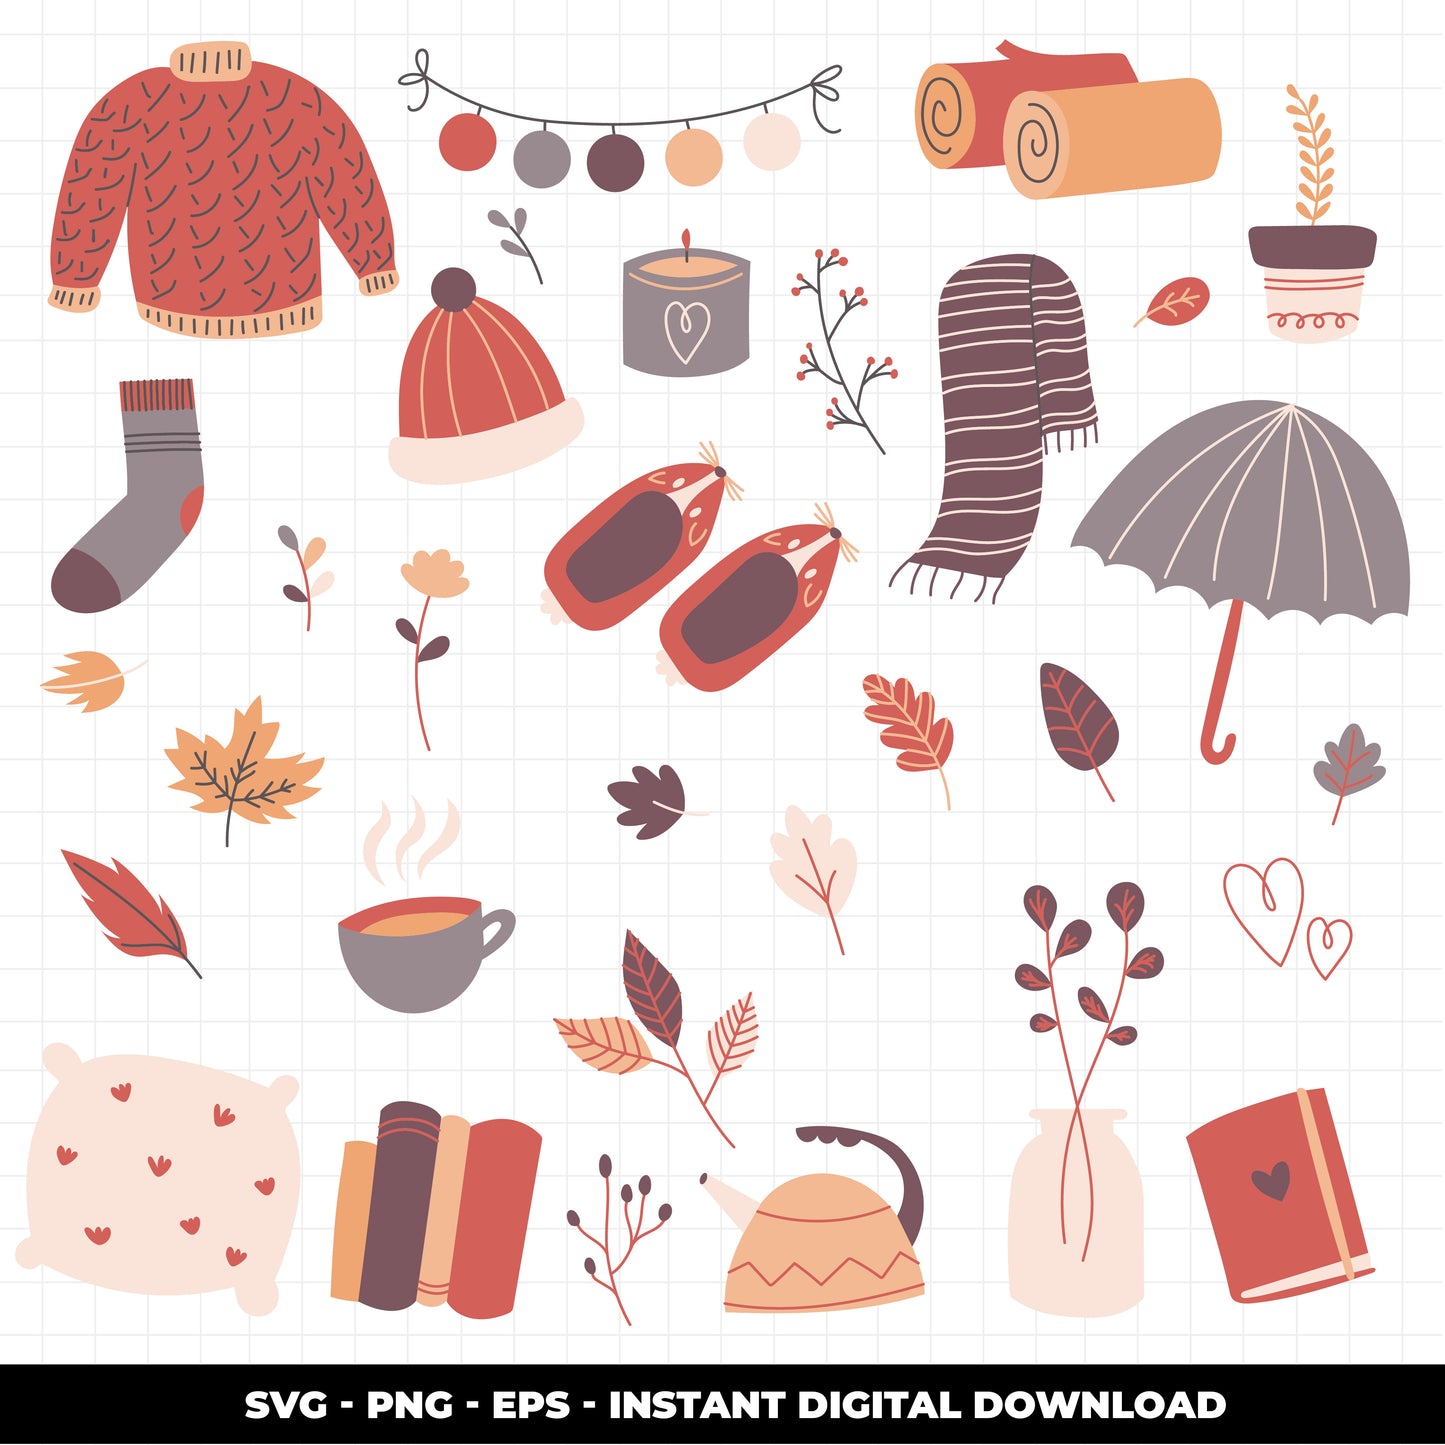 COD1144 - Autumn clipart, fall clipart, Leaves clipart, Plants eps, Paper Leaves, Leaf Templates, Wreath